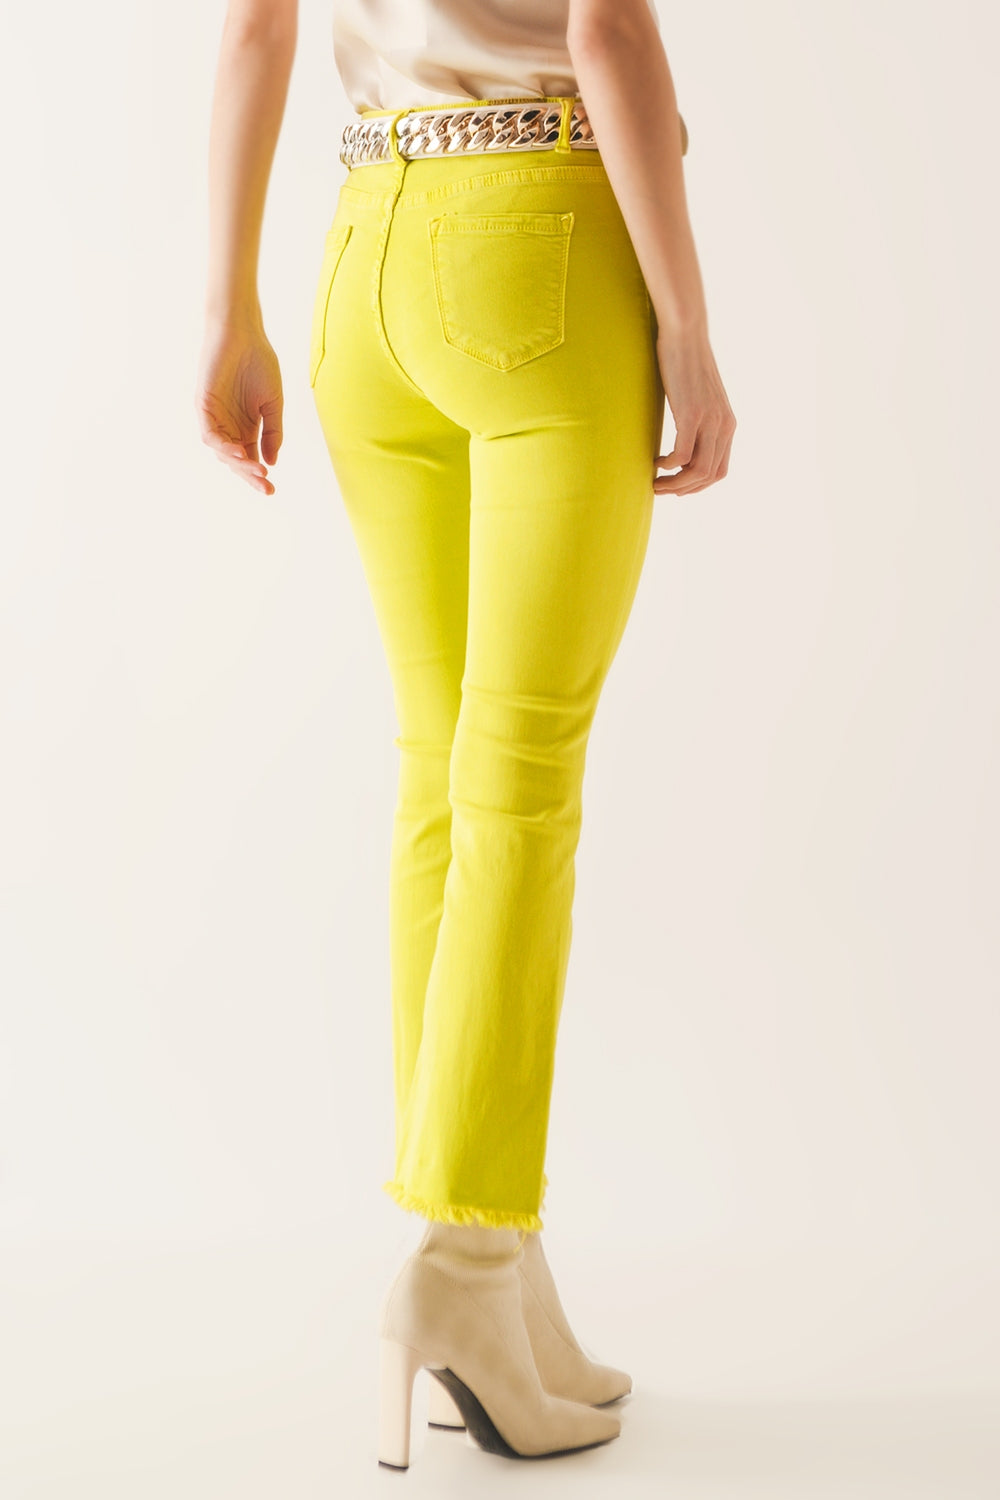 Flare jeans with raw hem edge in yellow - Szua Store